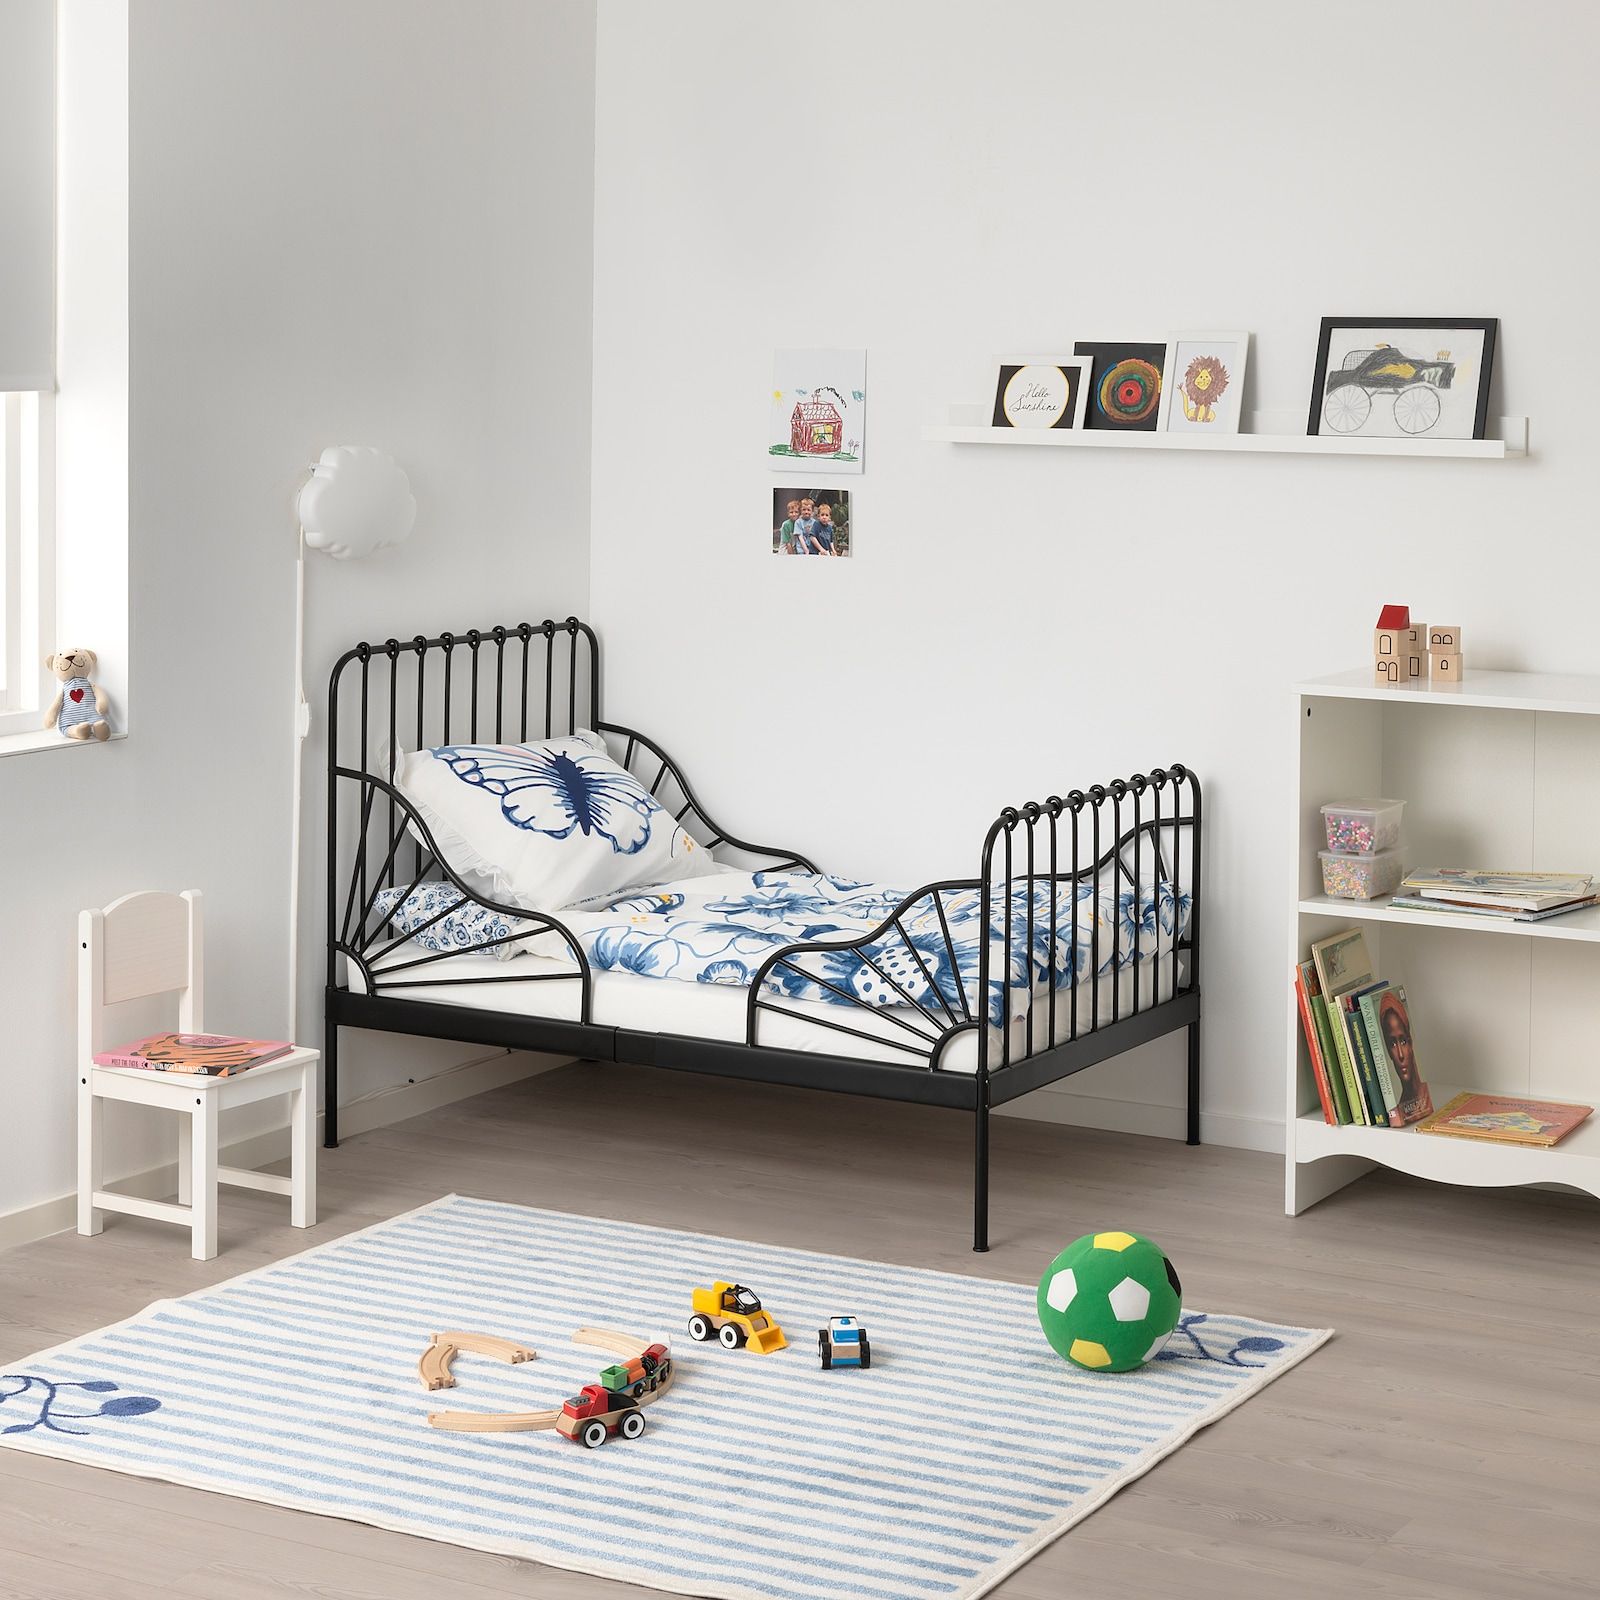 Adaptive Rest: Adjustable Beds Grow with Israeli Children